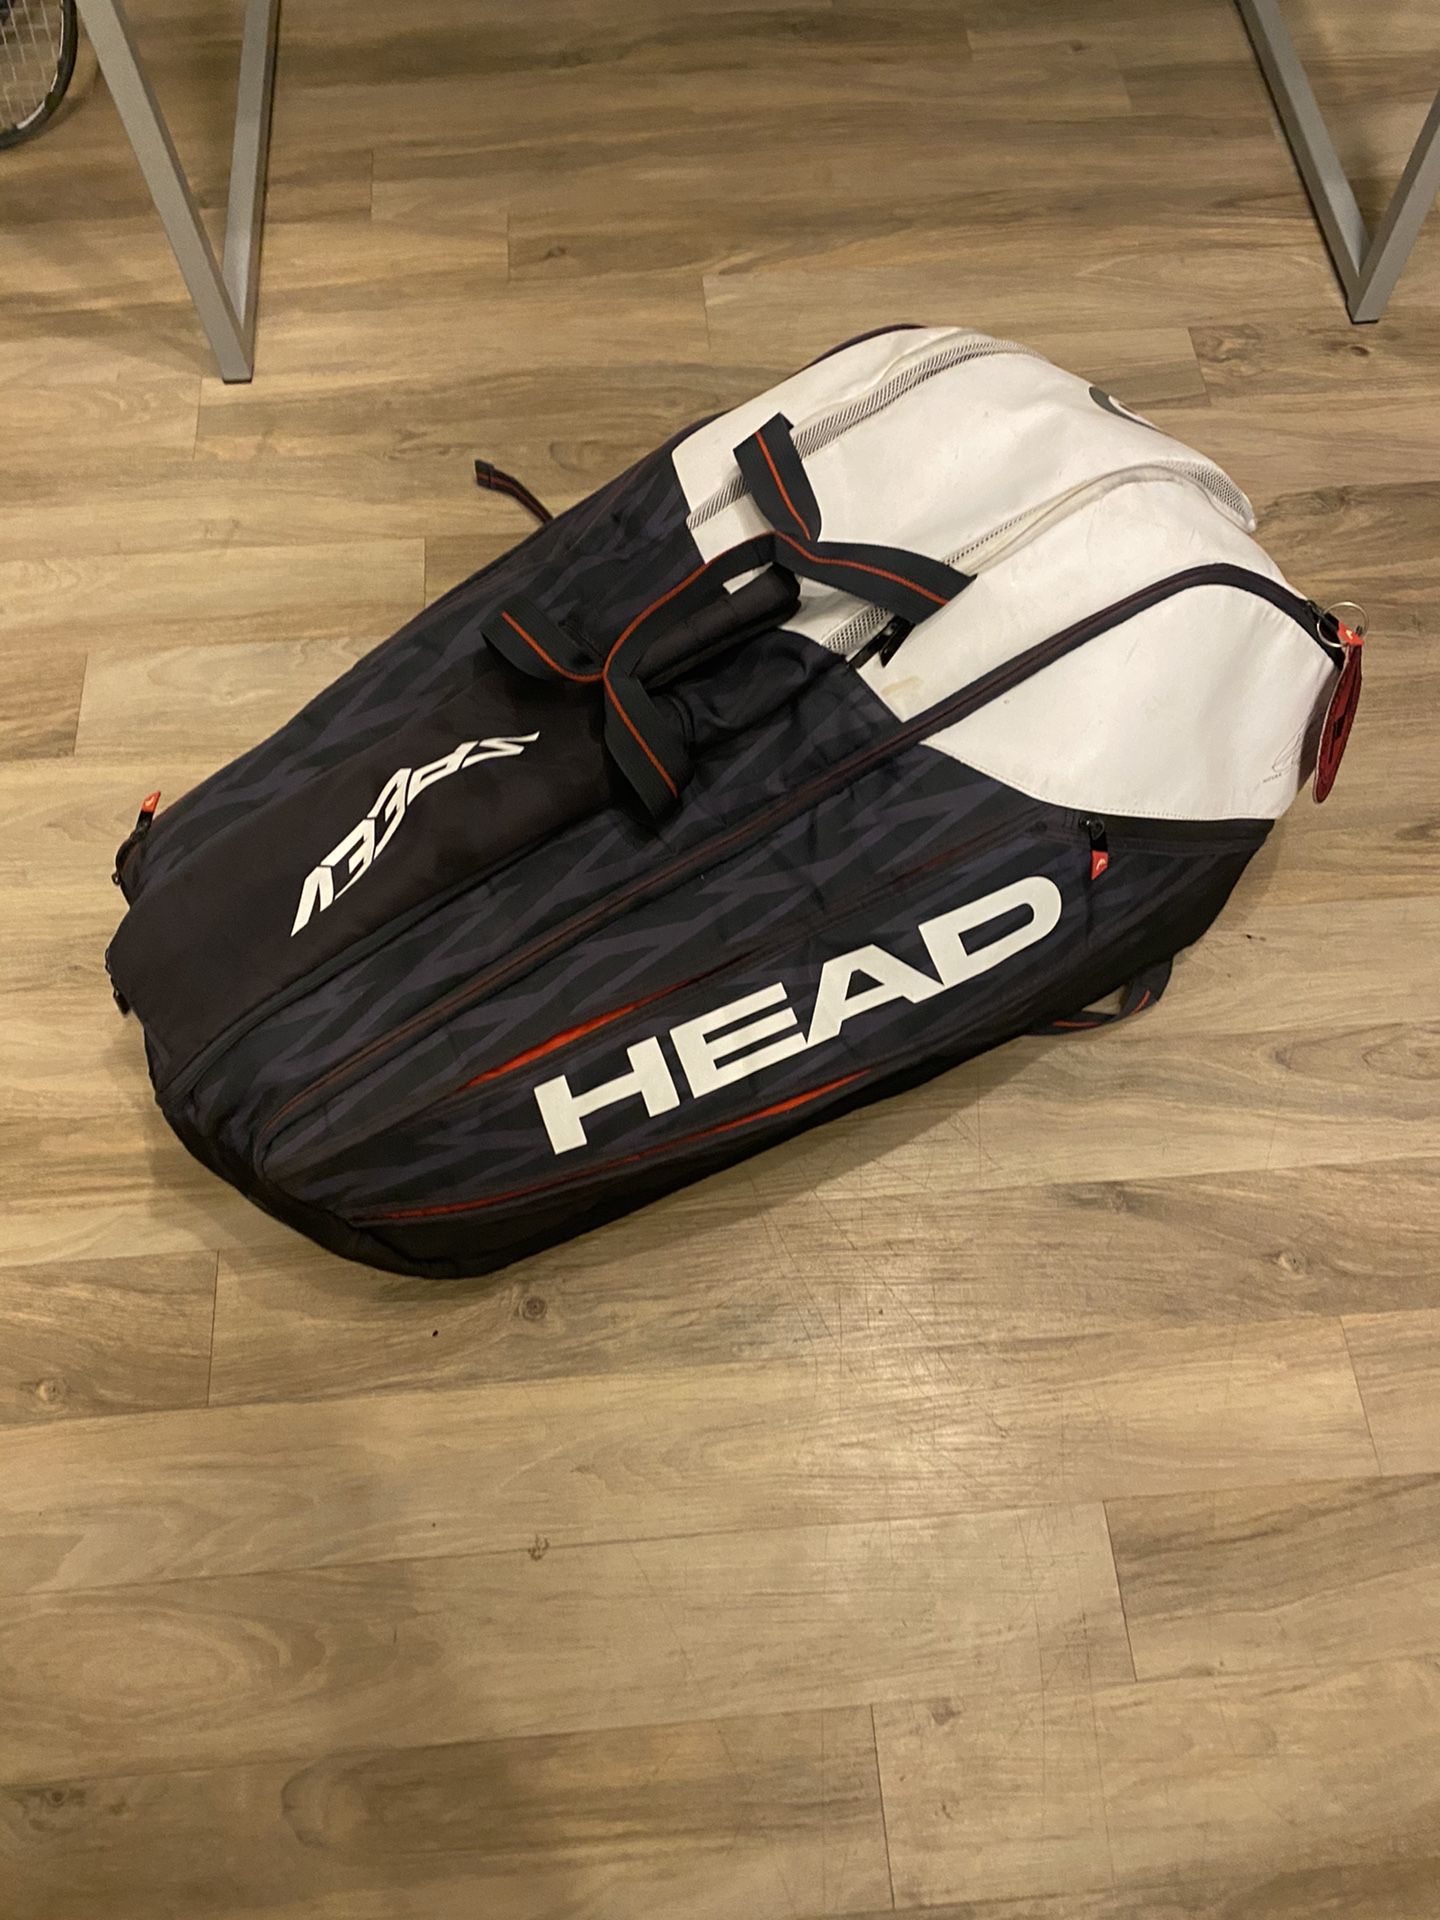 Tennis bag (head speed)